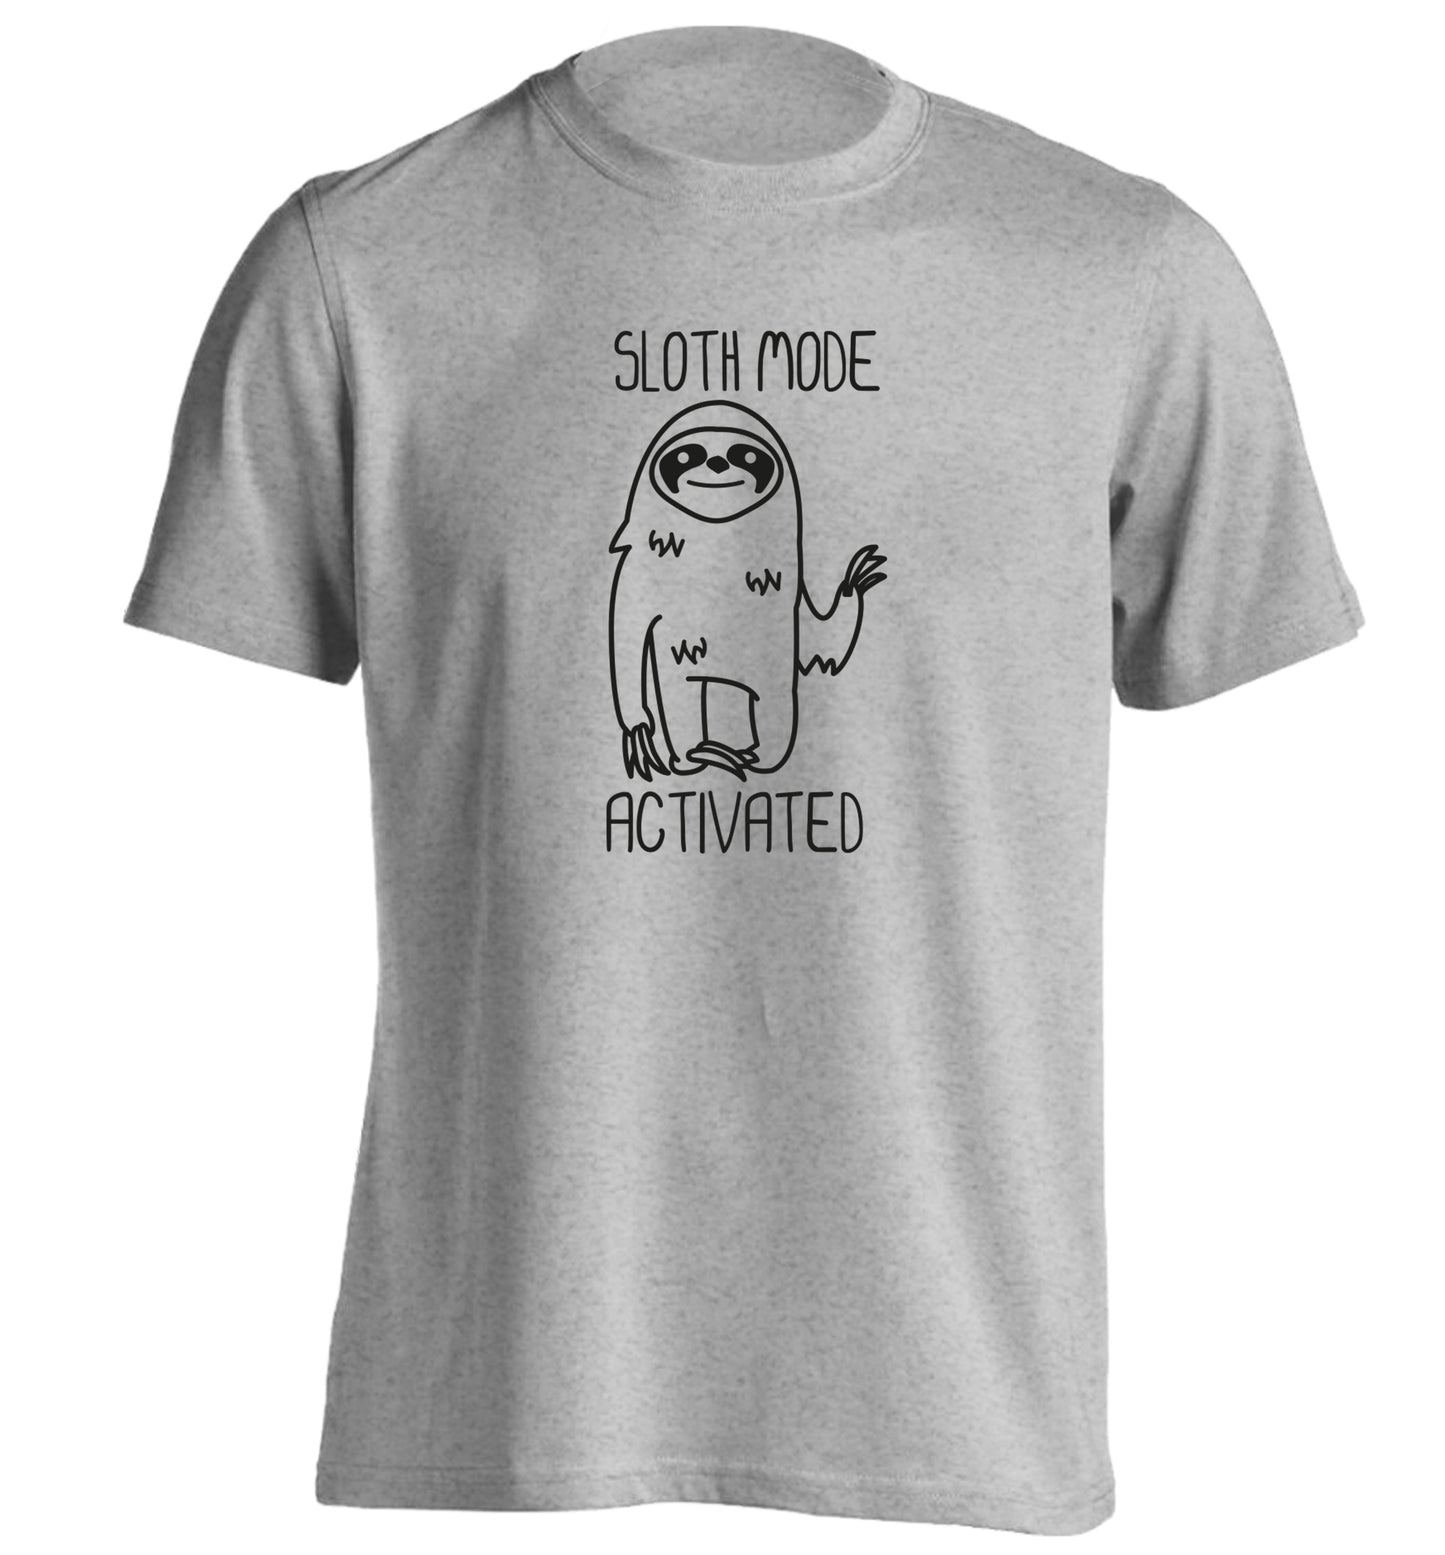 Sloth mode acitvated adults unisex grey Tshirt 2XL